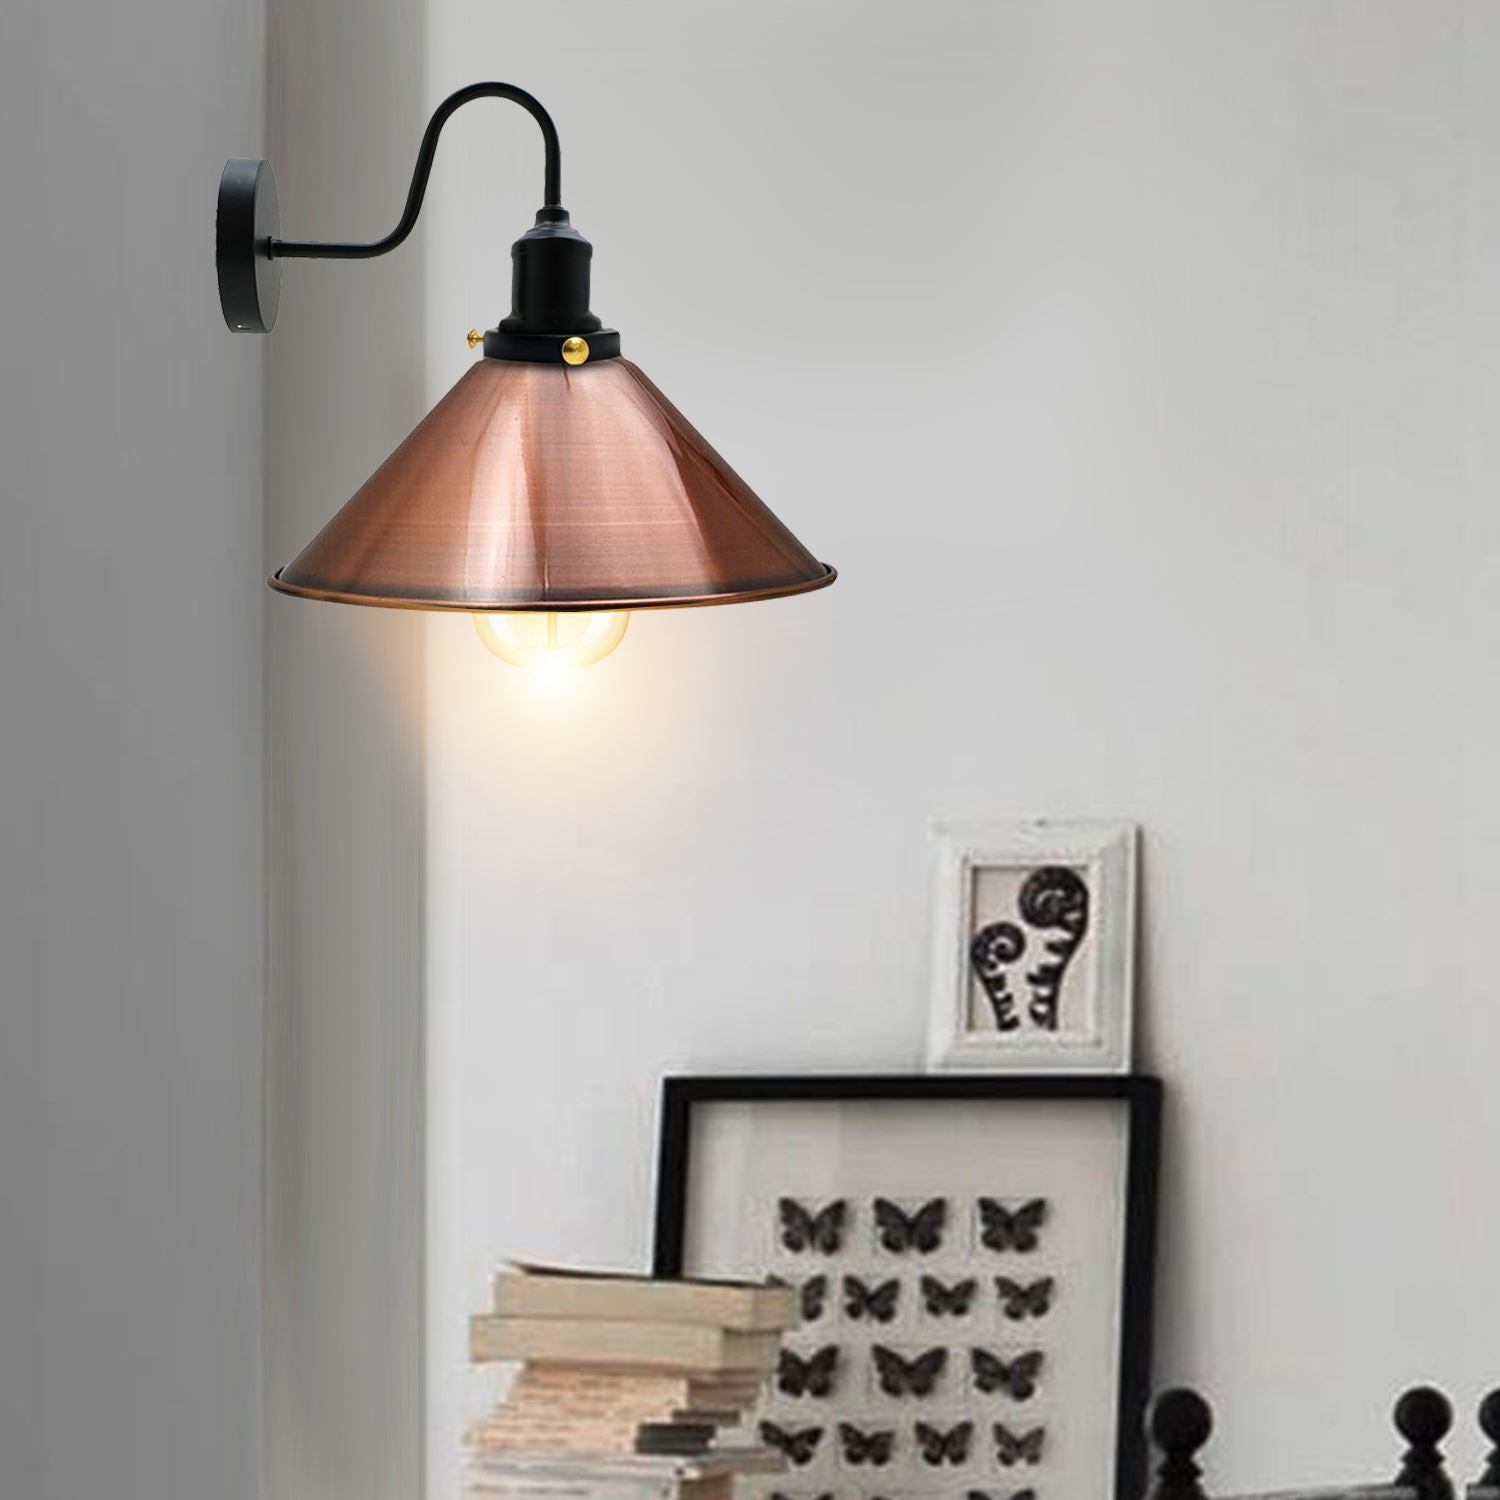 Vintage Industrial Metal Cone Shade Lighting Indoor Wall Sconce Light Fittings~3389 - LEDSone UK Ltd